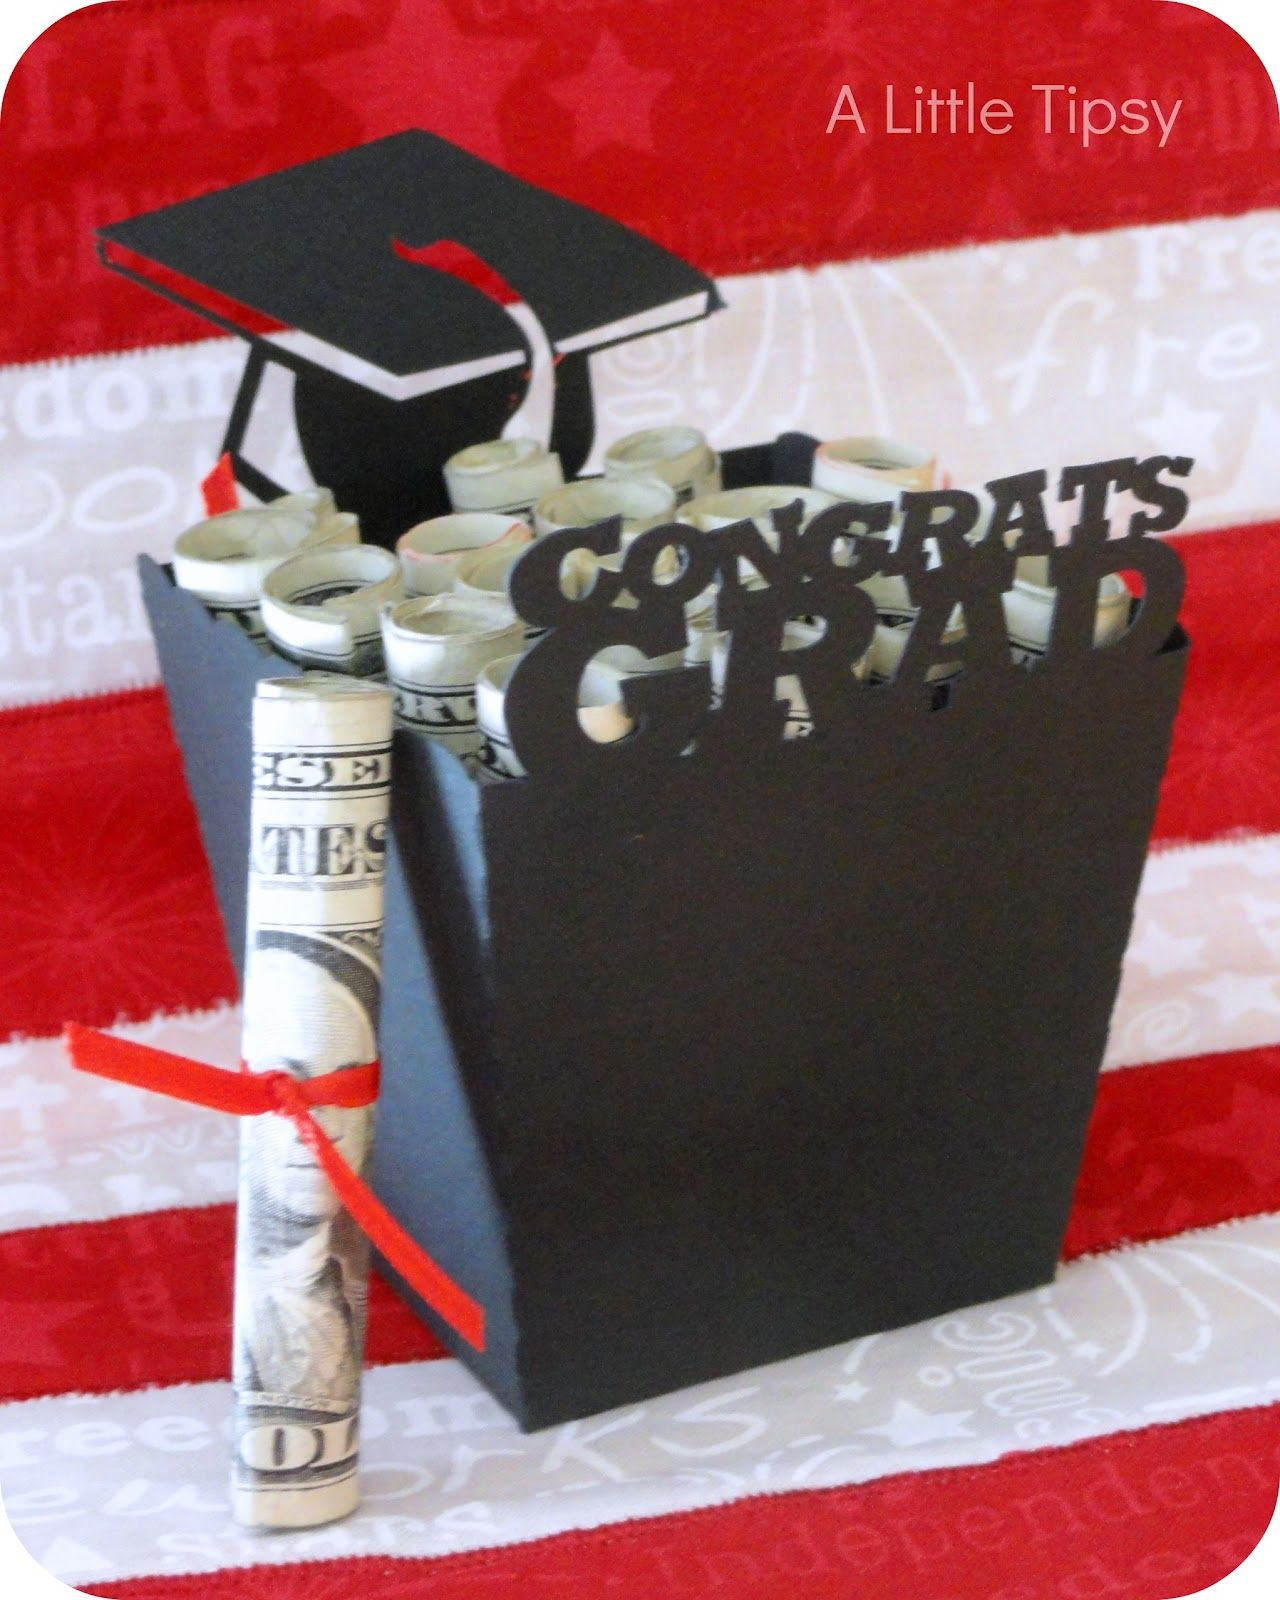 Grad School Graduation Gift Ideas
 Last Minute Graduation Gift Graduation t ideas